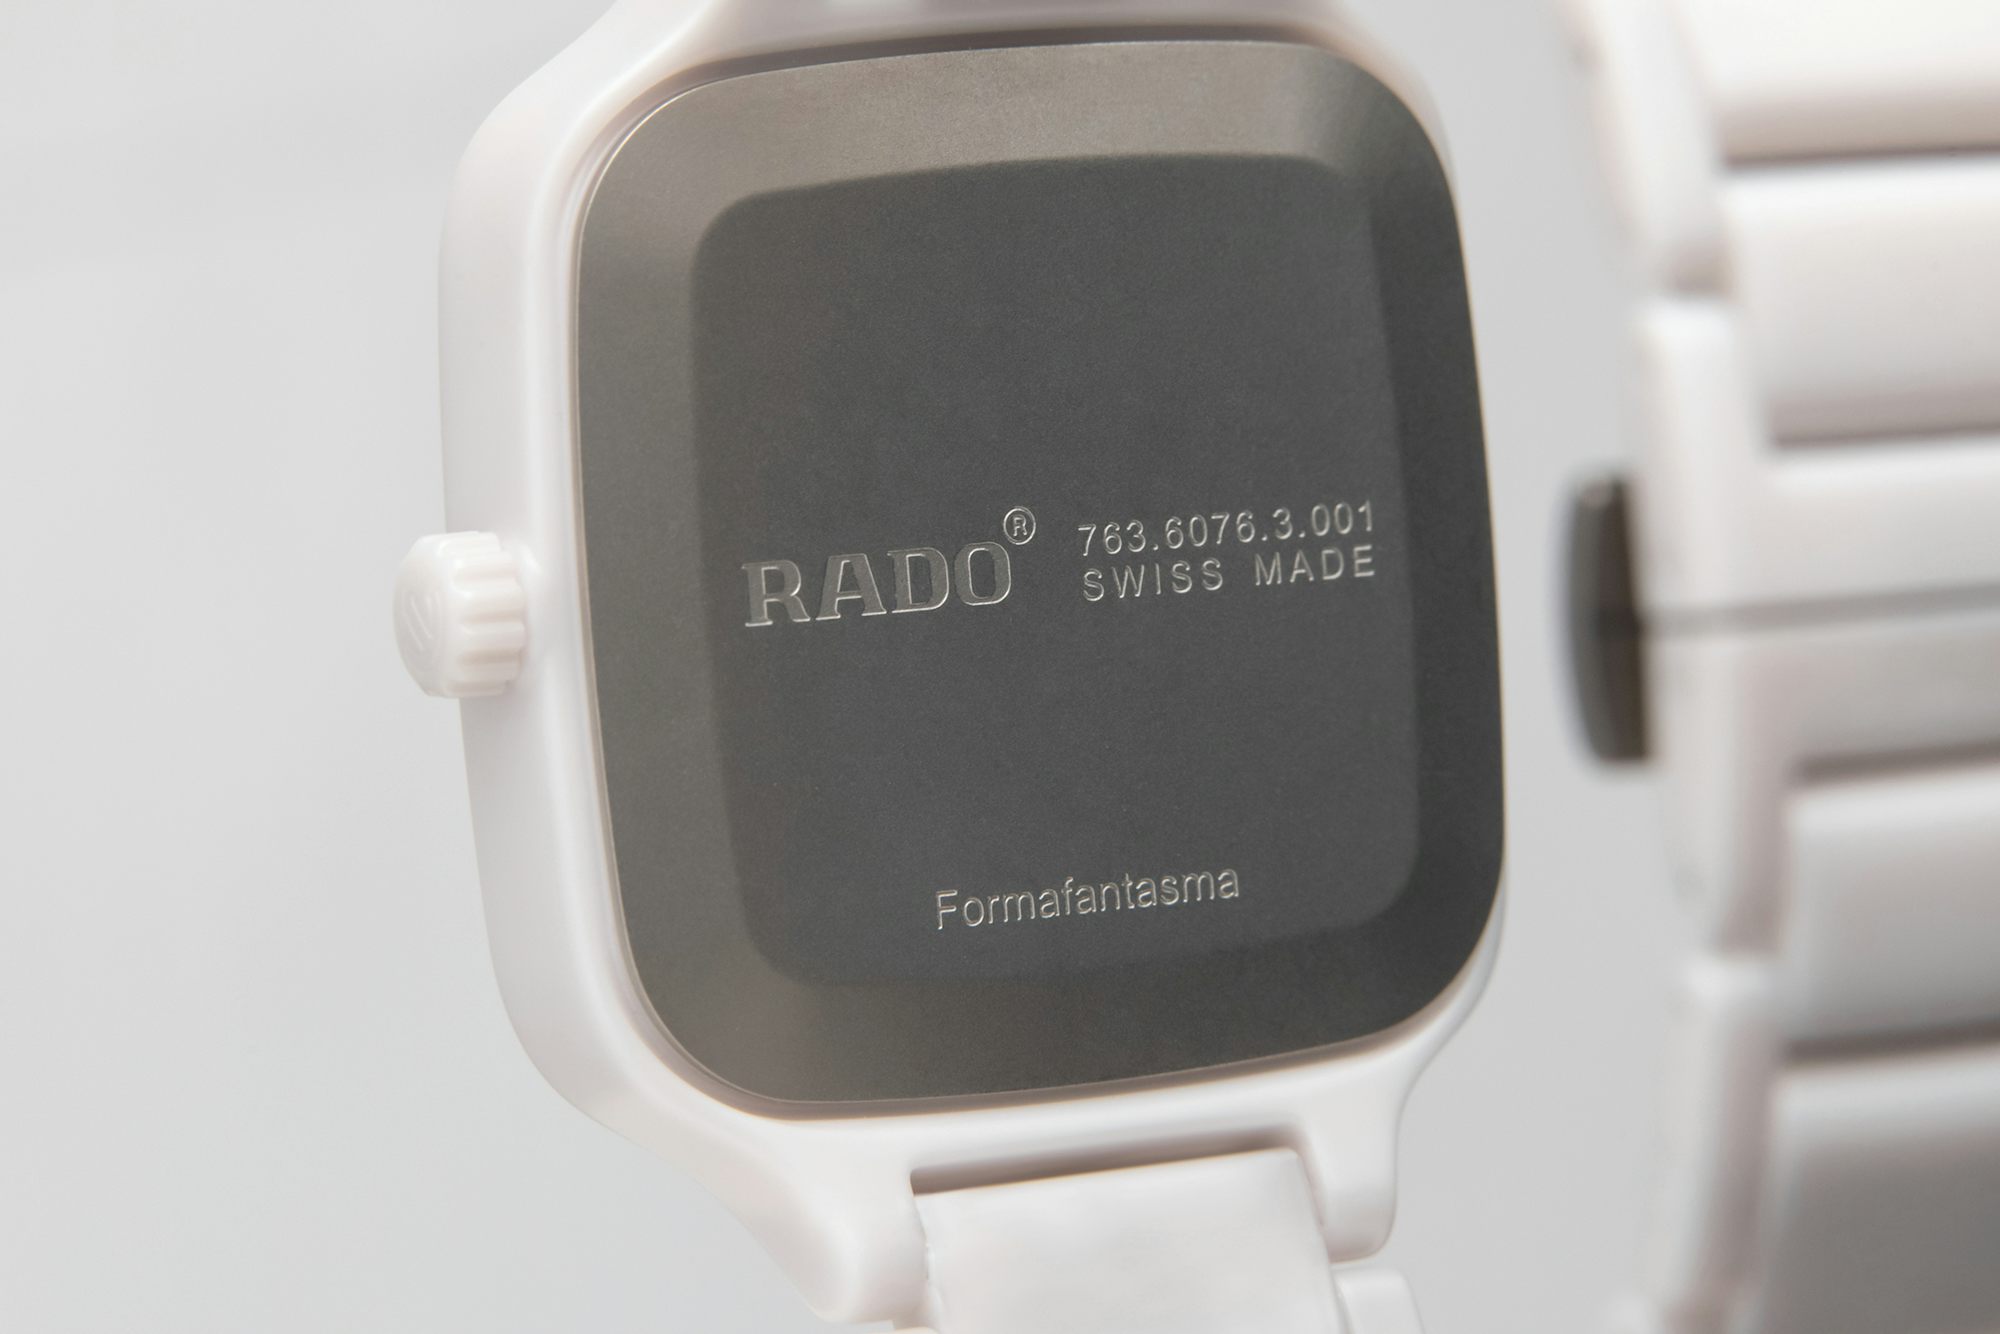 The caseback of a white Rado watch